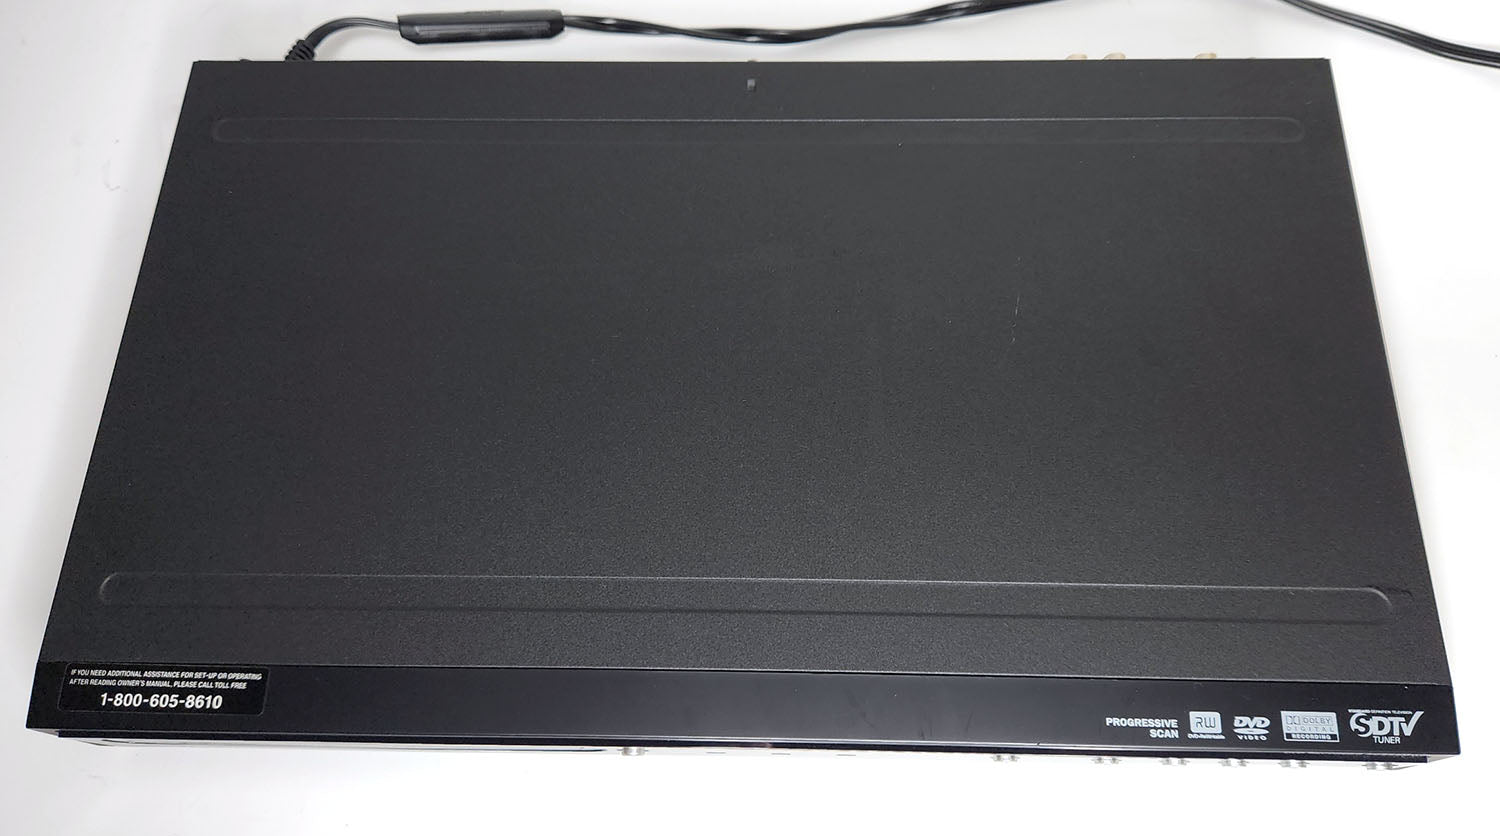 Magnavox ZC352MW8A DVD Recorder with ATSC Tuner - Top